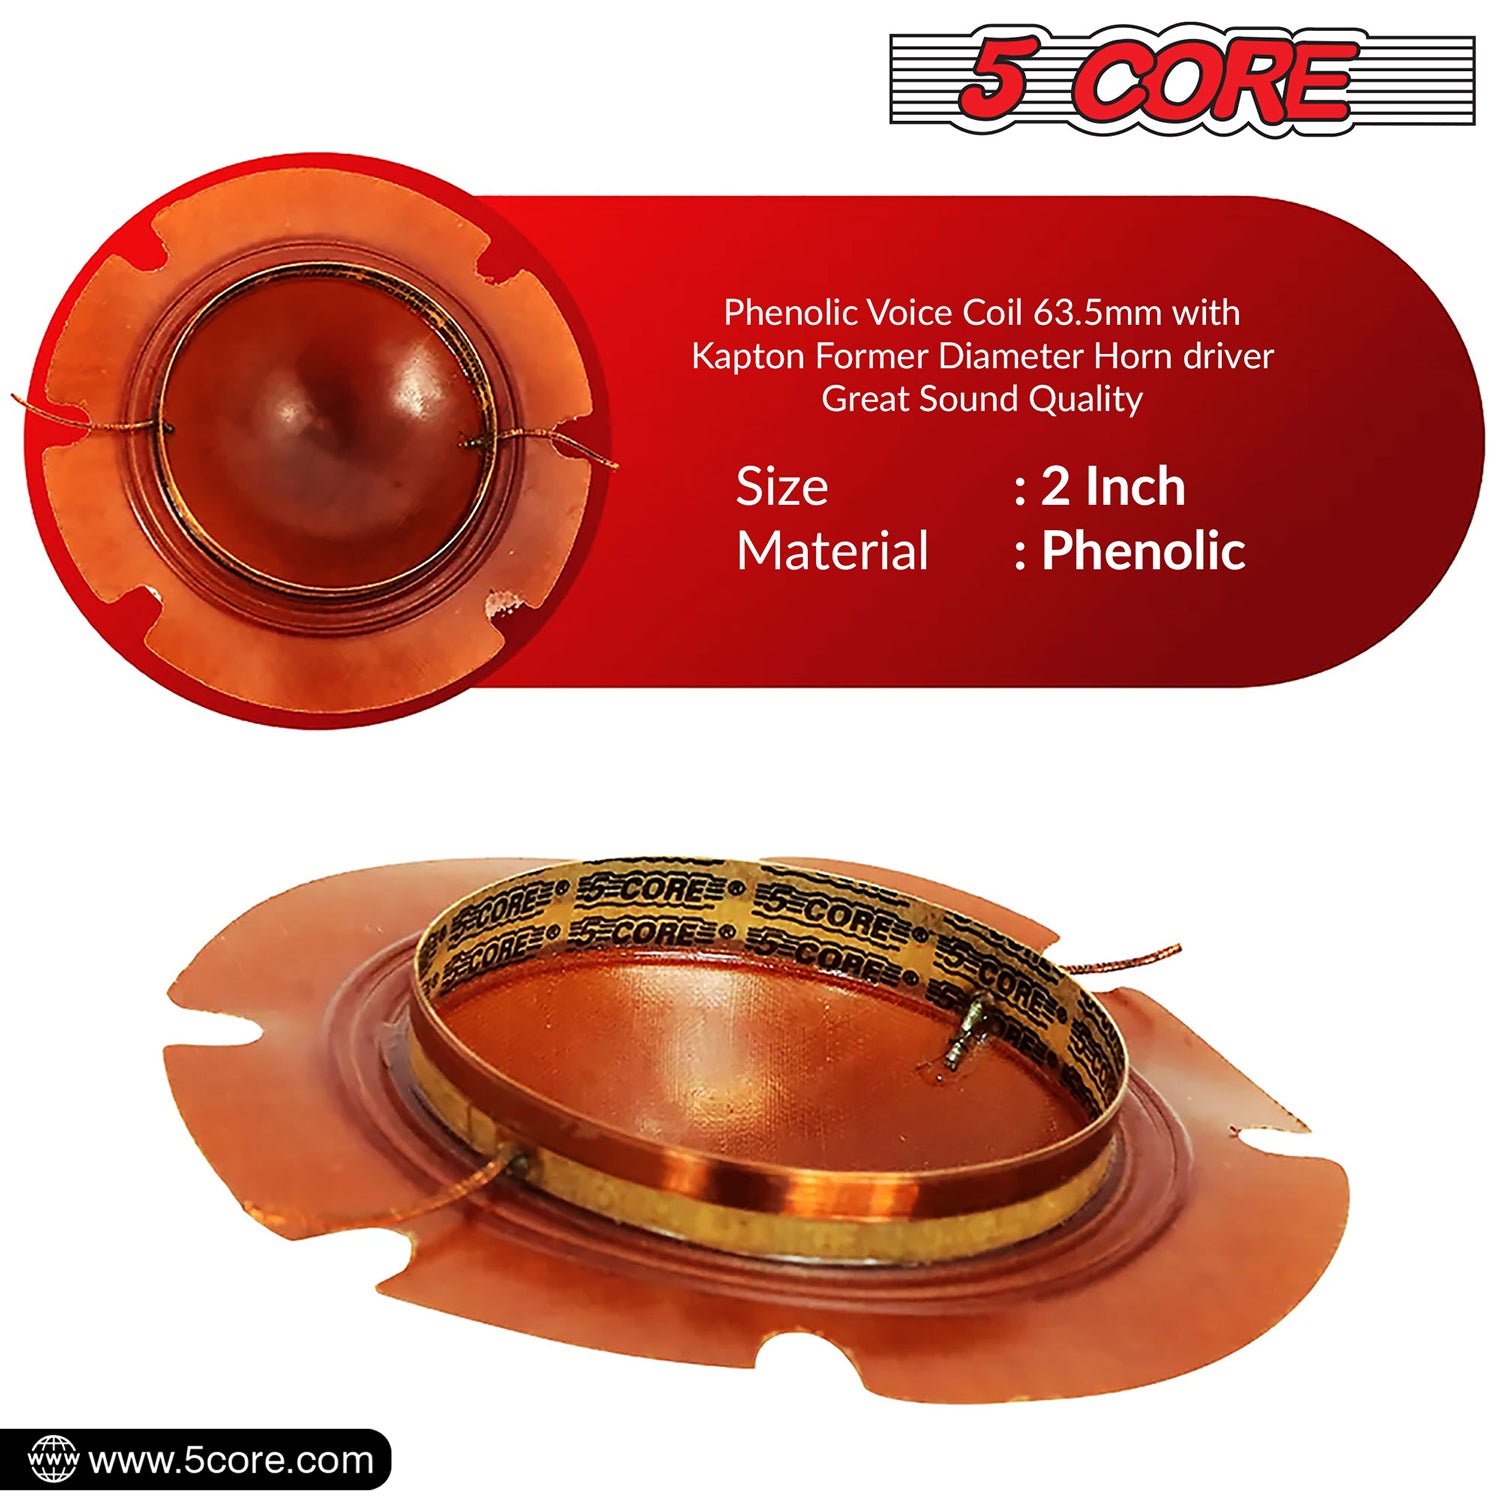 5 Core Voice Coil Diaphragm • Phenolic 2" Voice Coils • for Compression Horn Driver